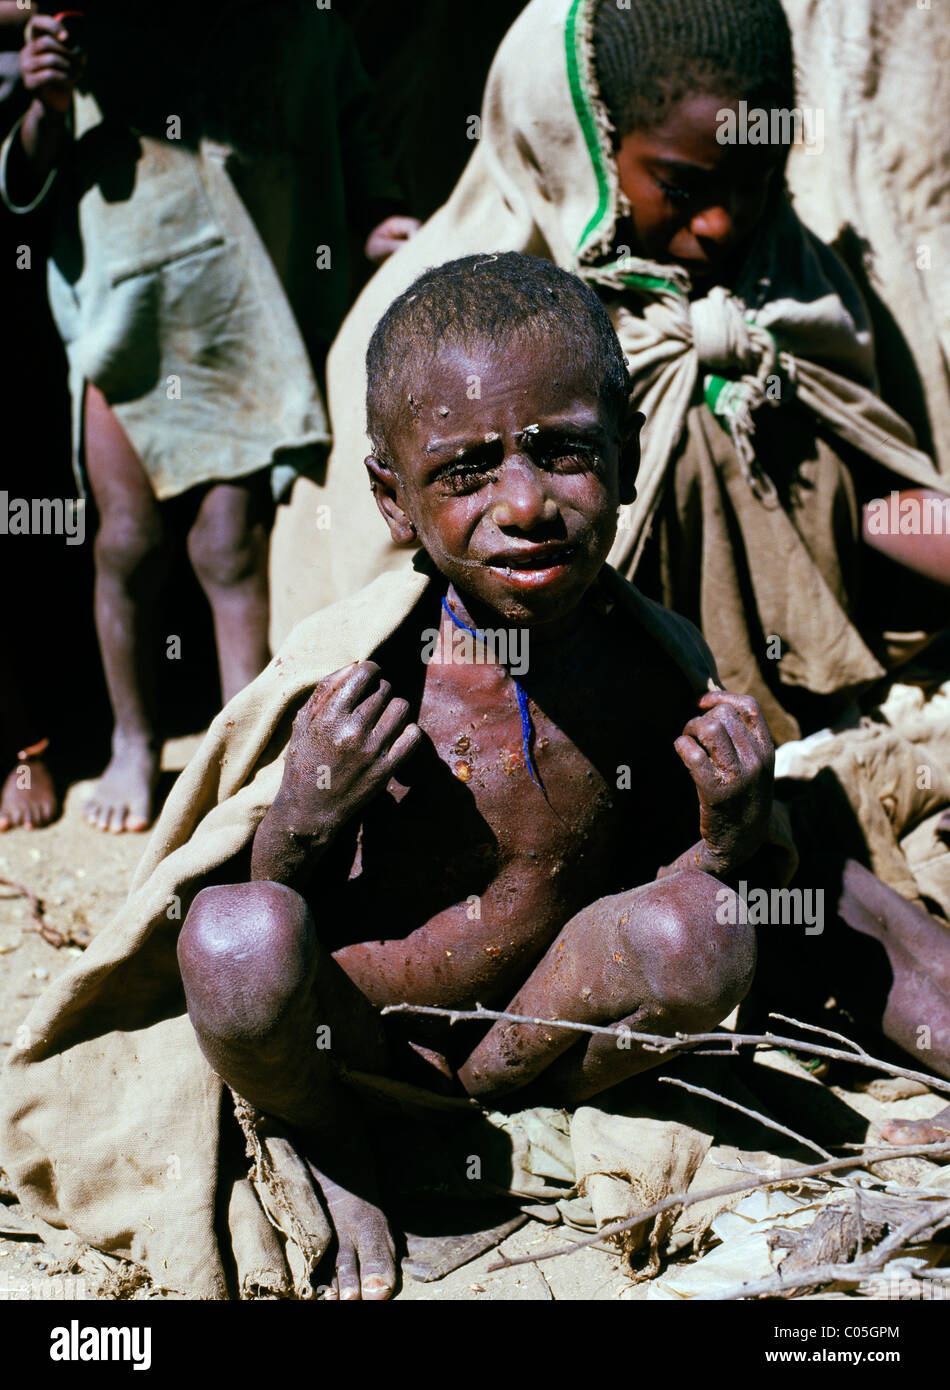 Famine victim in Darfur Sudan Africa Stock Photo